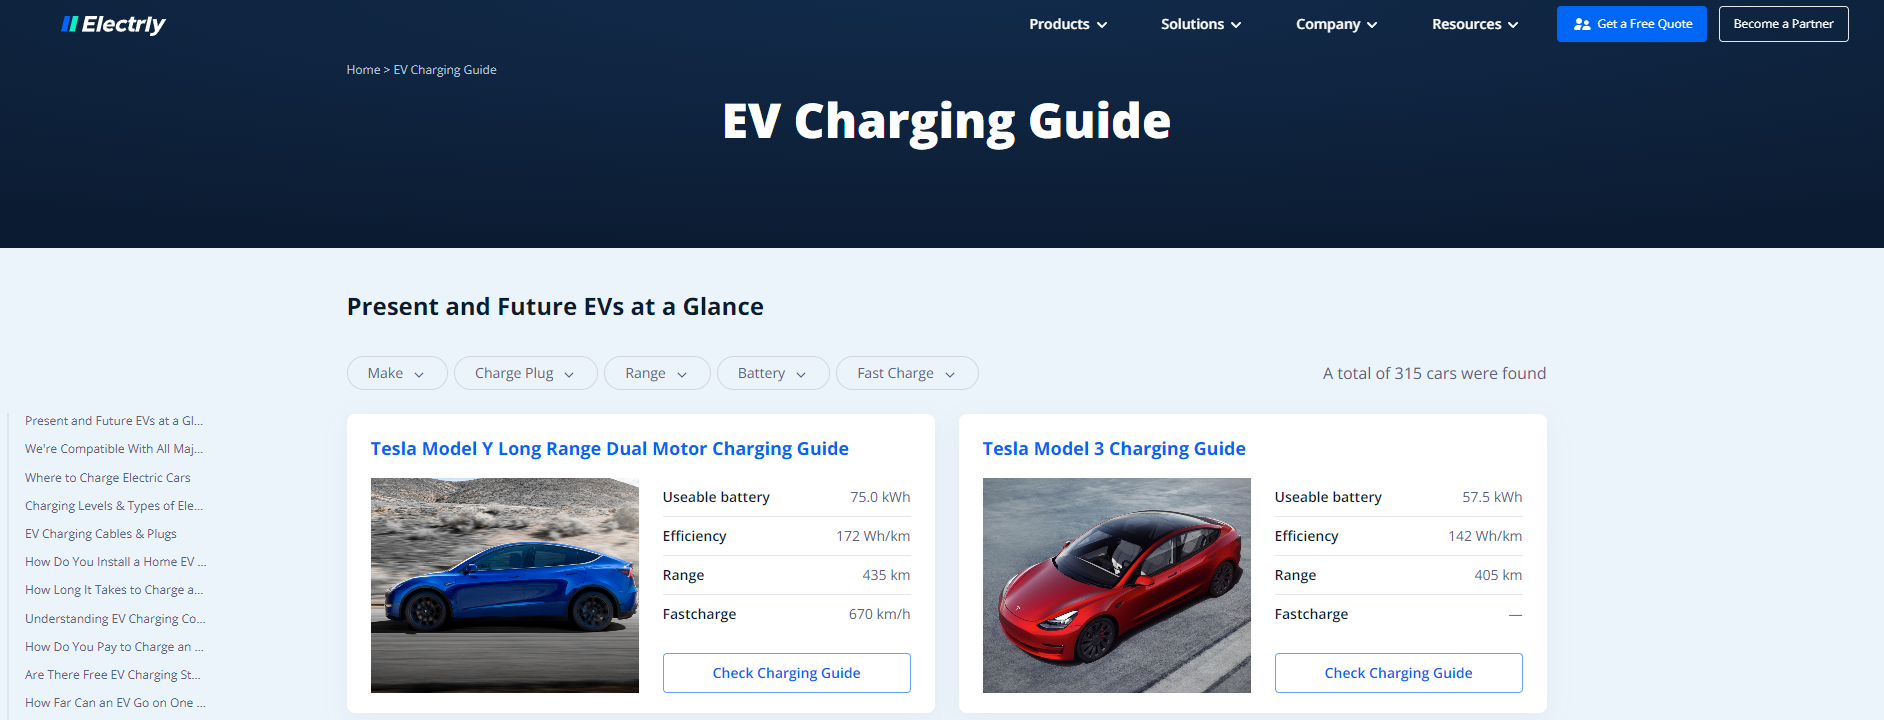 Understanding the Basics of EV Charging